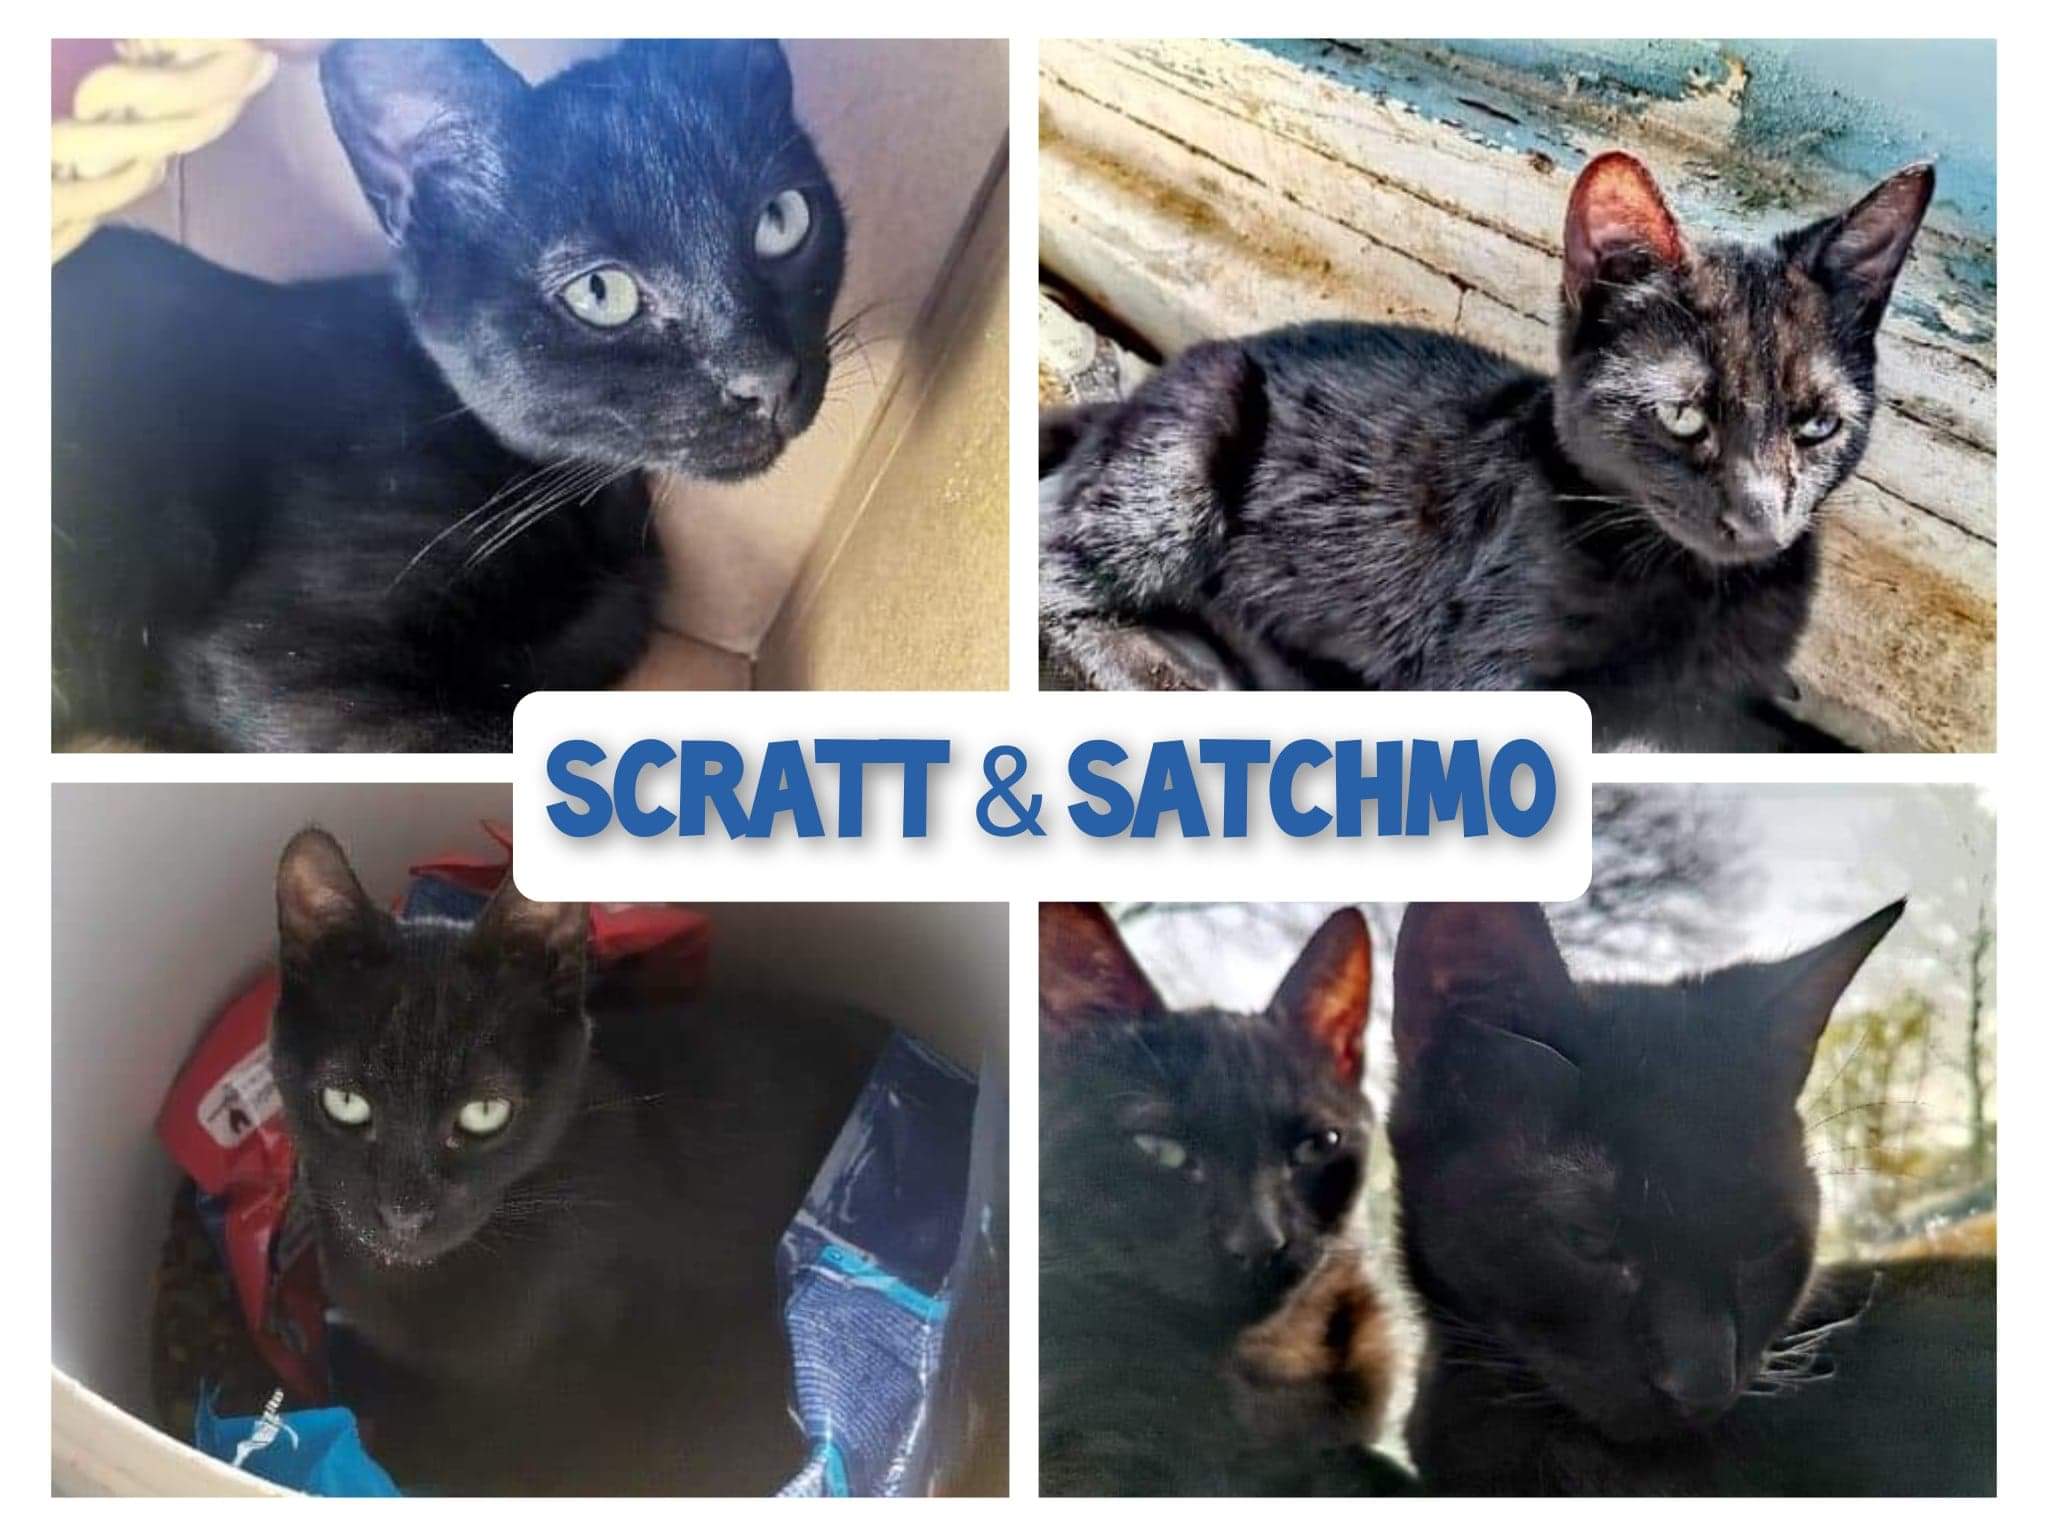 Scratt & Satchmo